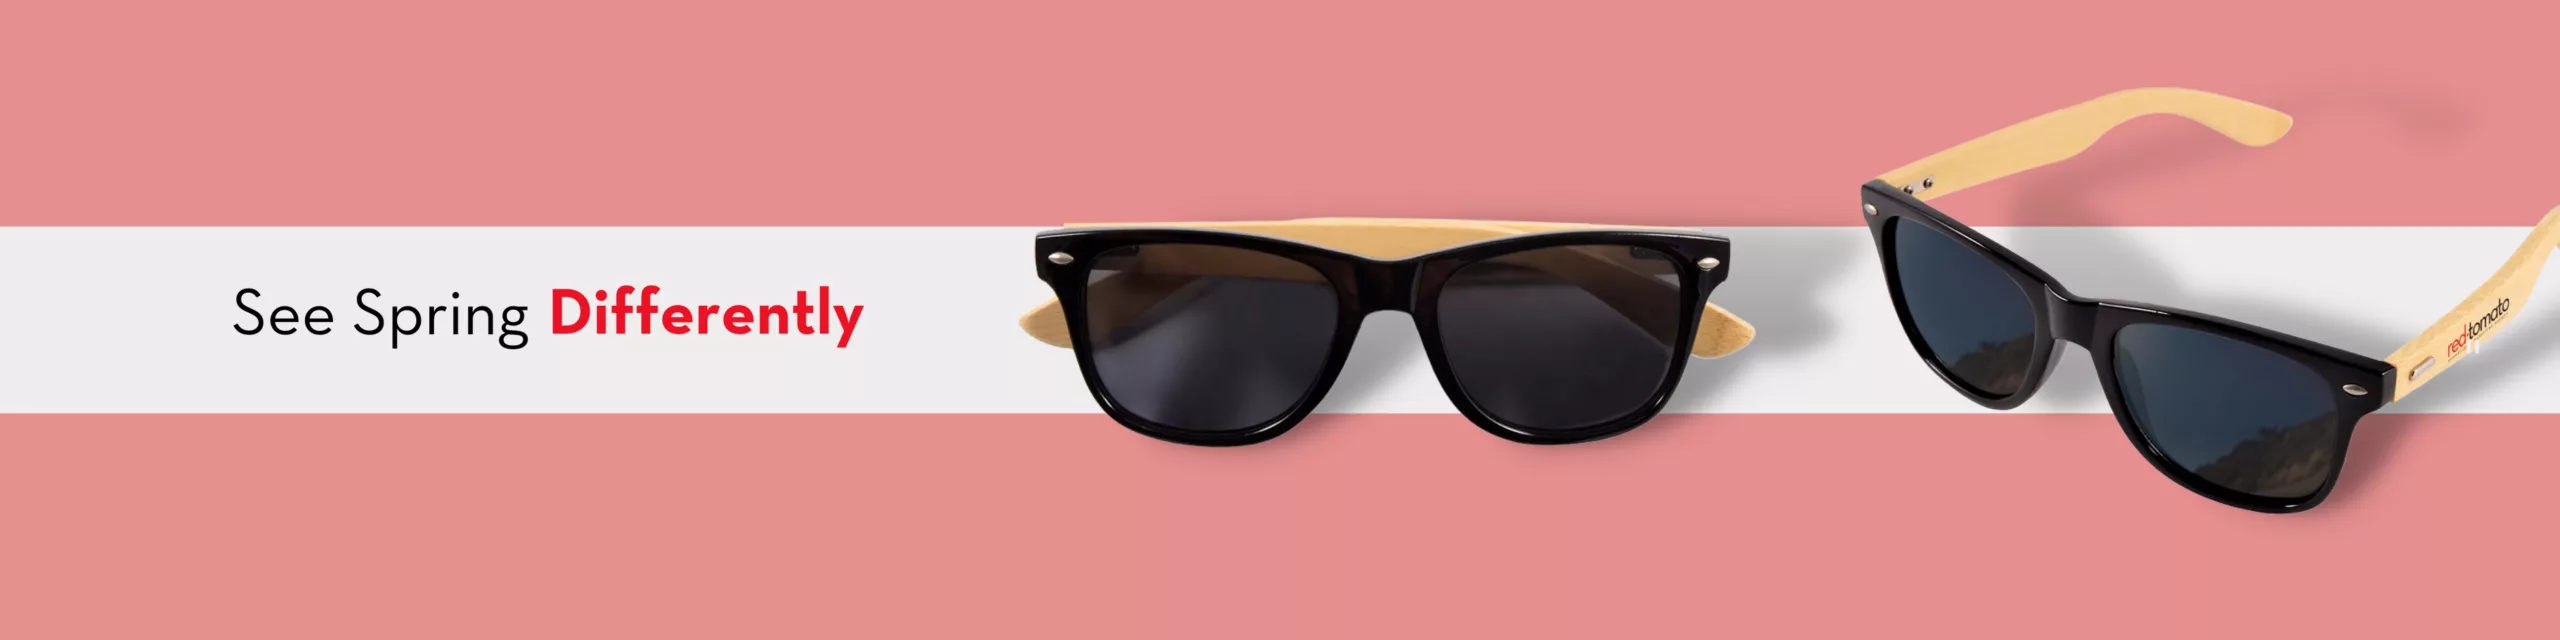 Spring Sunglasses gift ideas